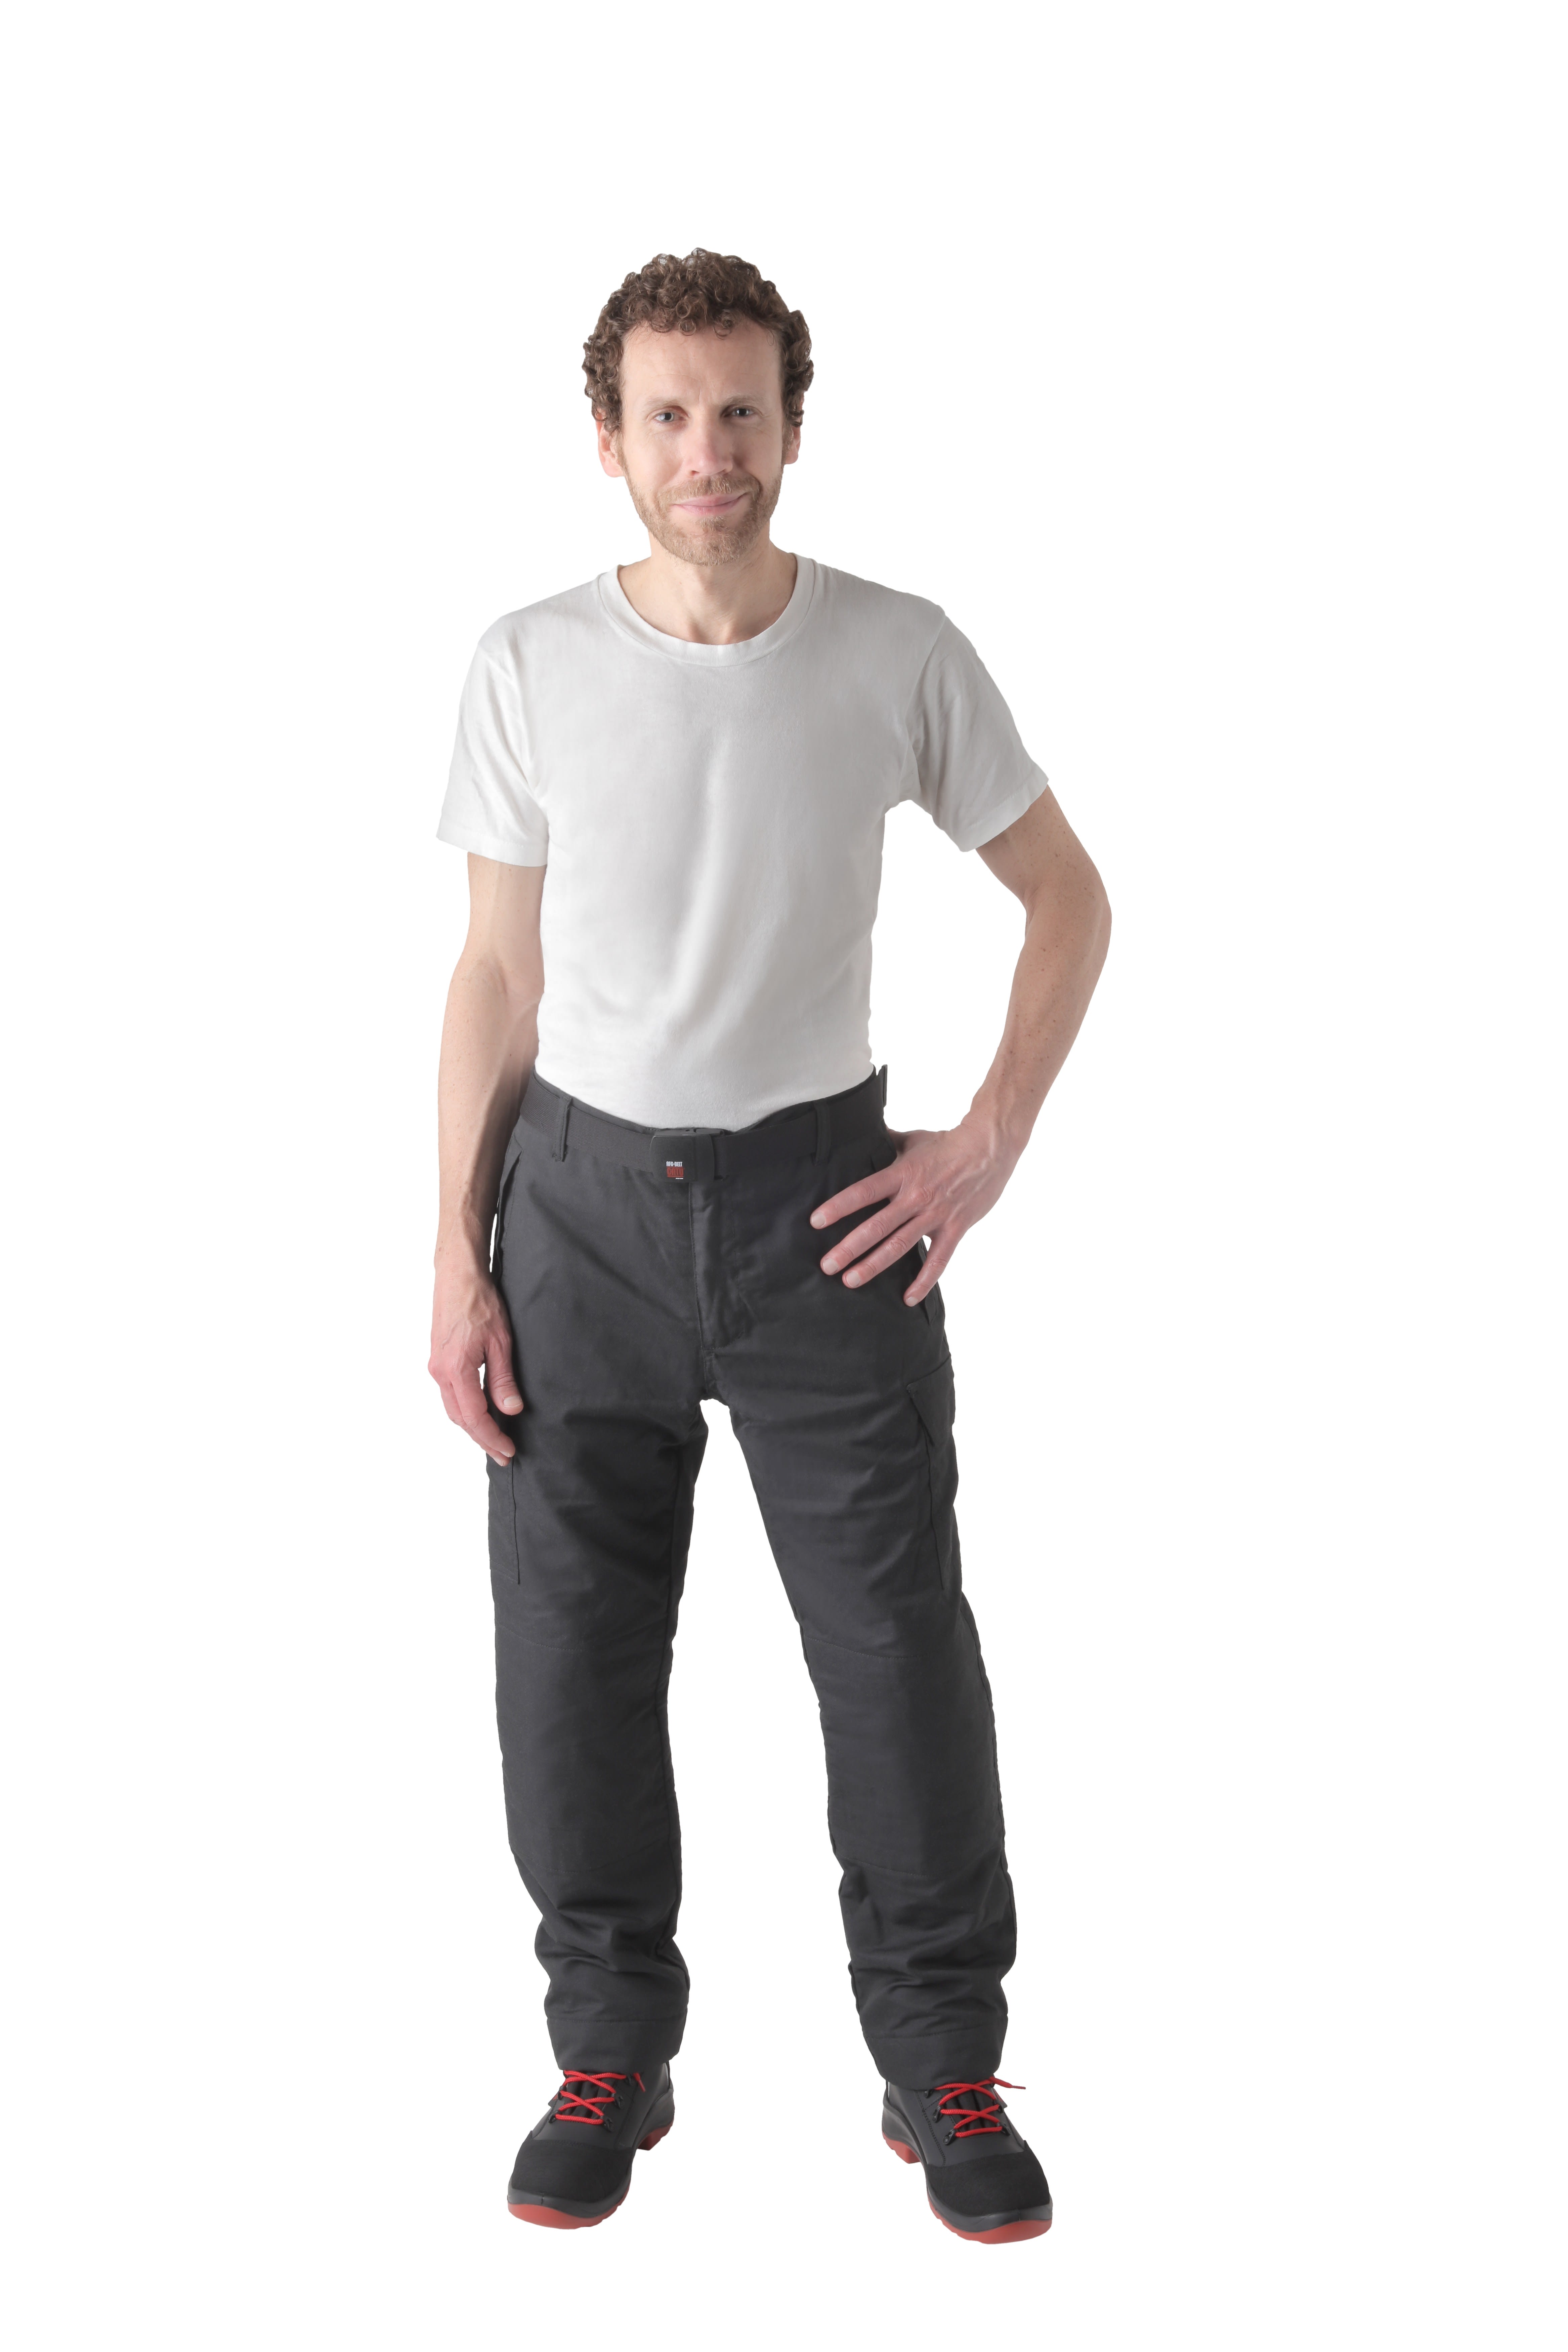 Catu - pantalon 25-40 cal-cm2 noir non feu soudure AS-3xl